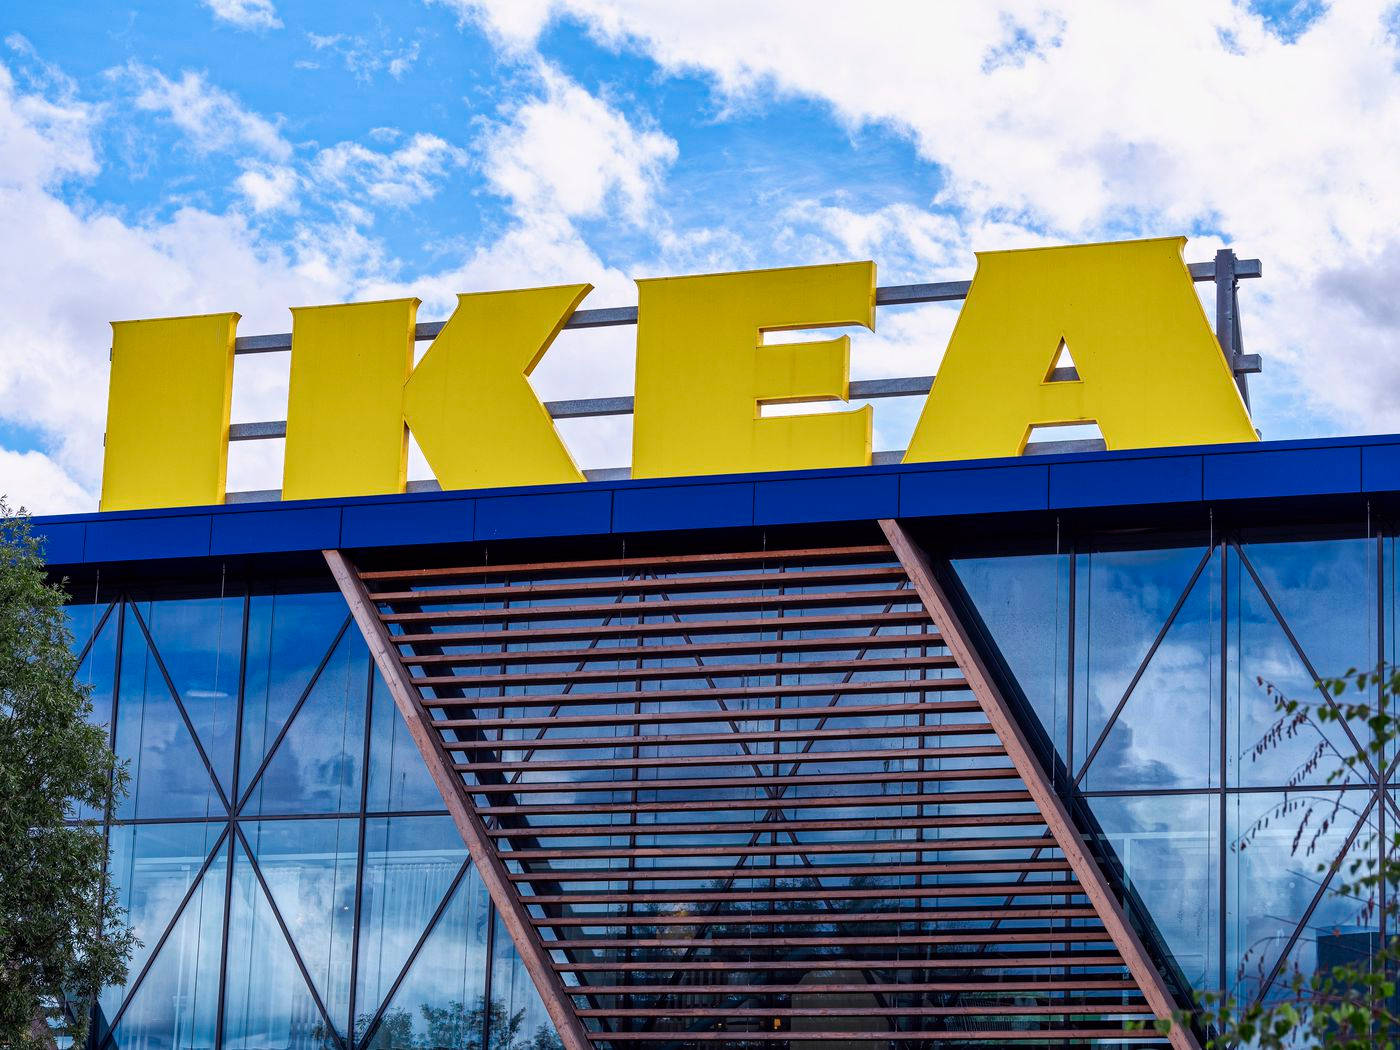 IKEA Signage Top Of Building Wallpaper